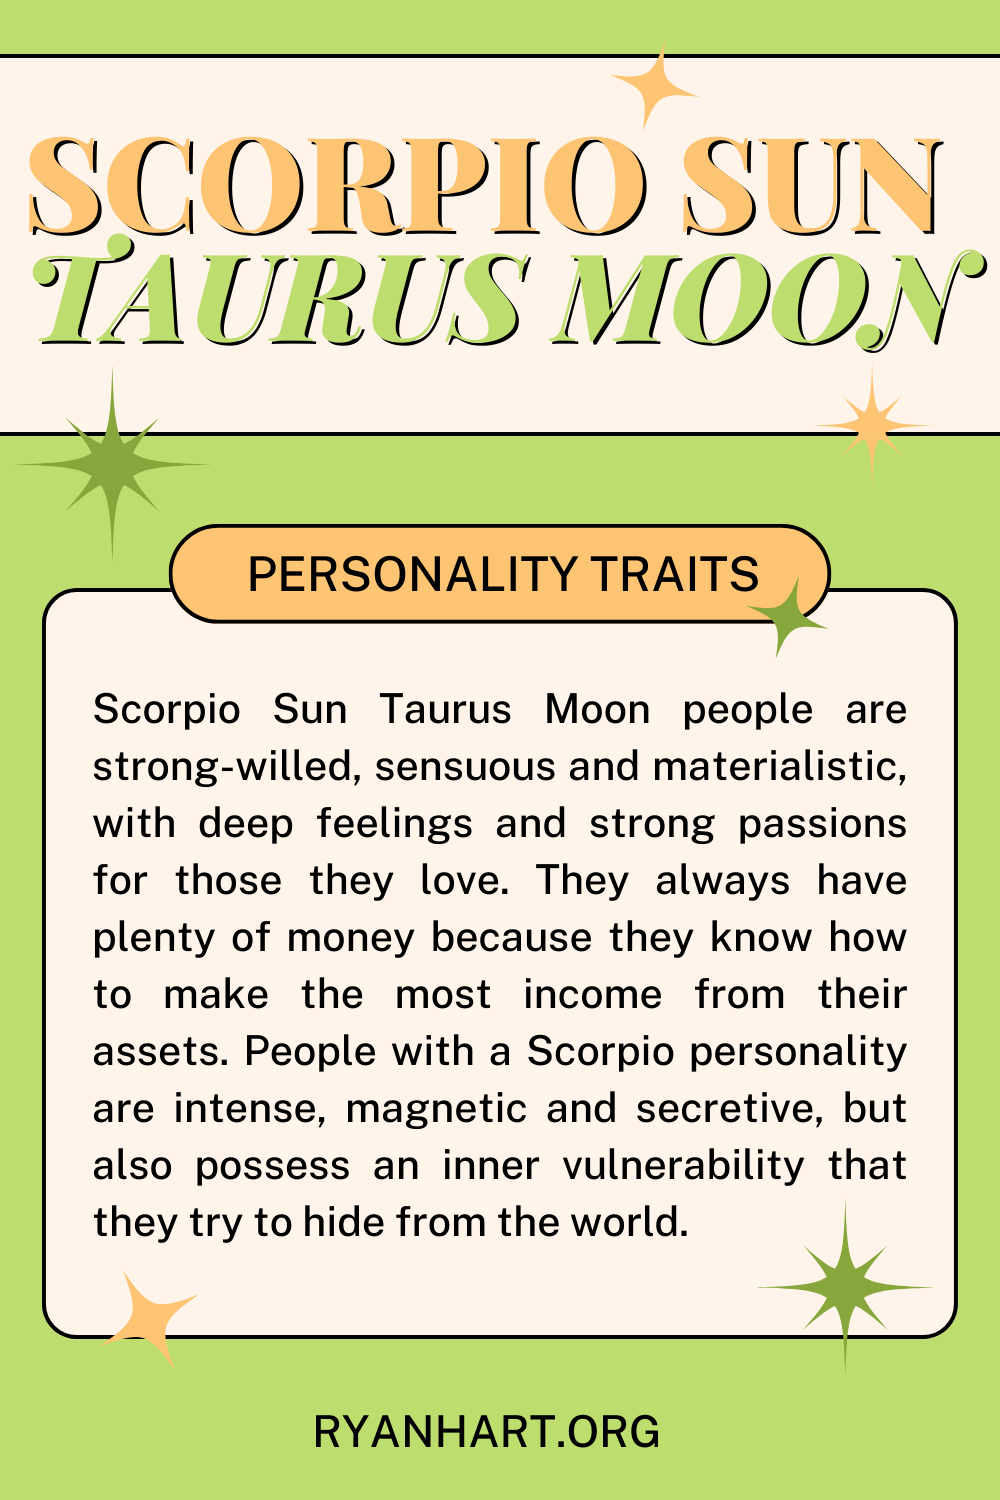  Scorpio Sun Taurus လ ပင်ကိုယ်စရိုက်လက္ခဏာများ